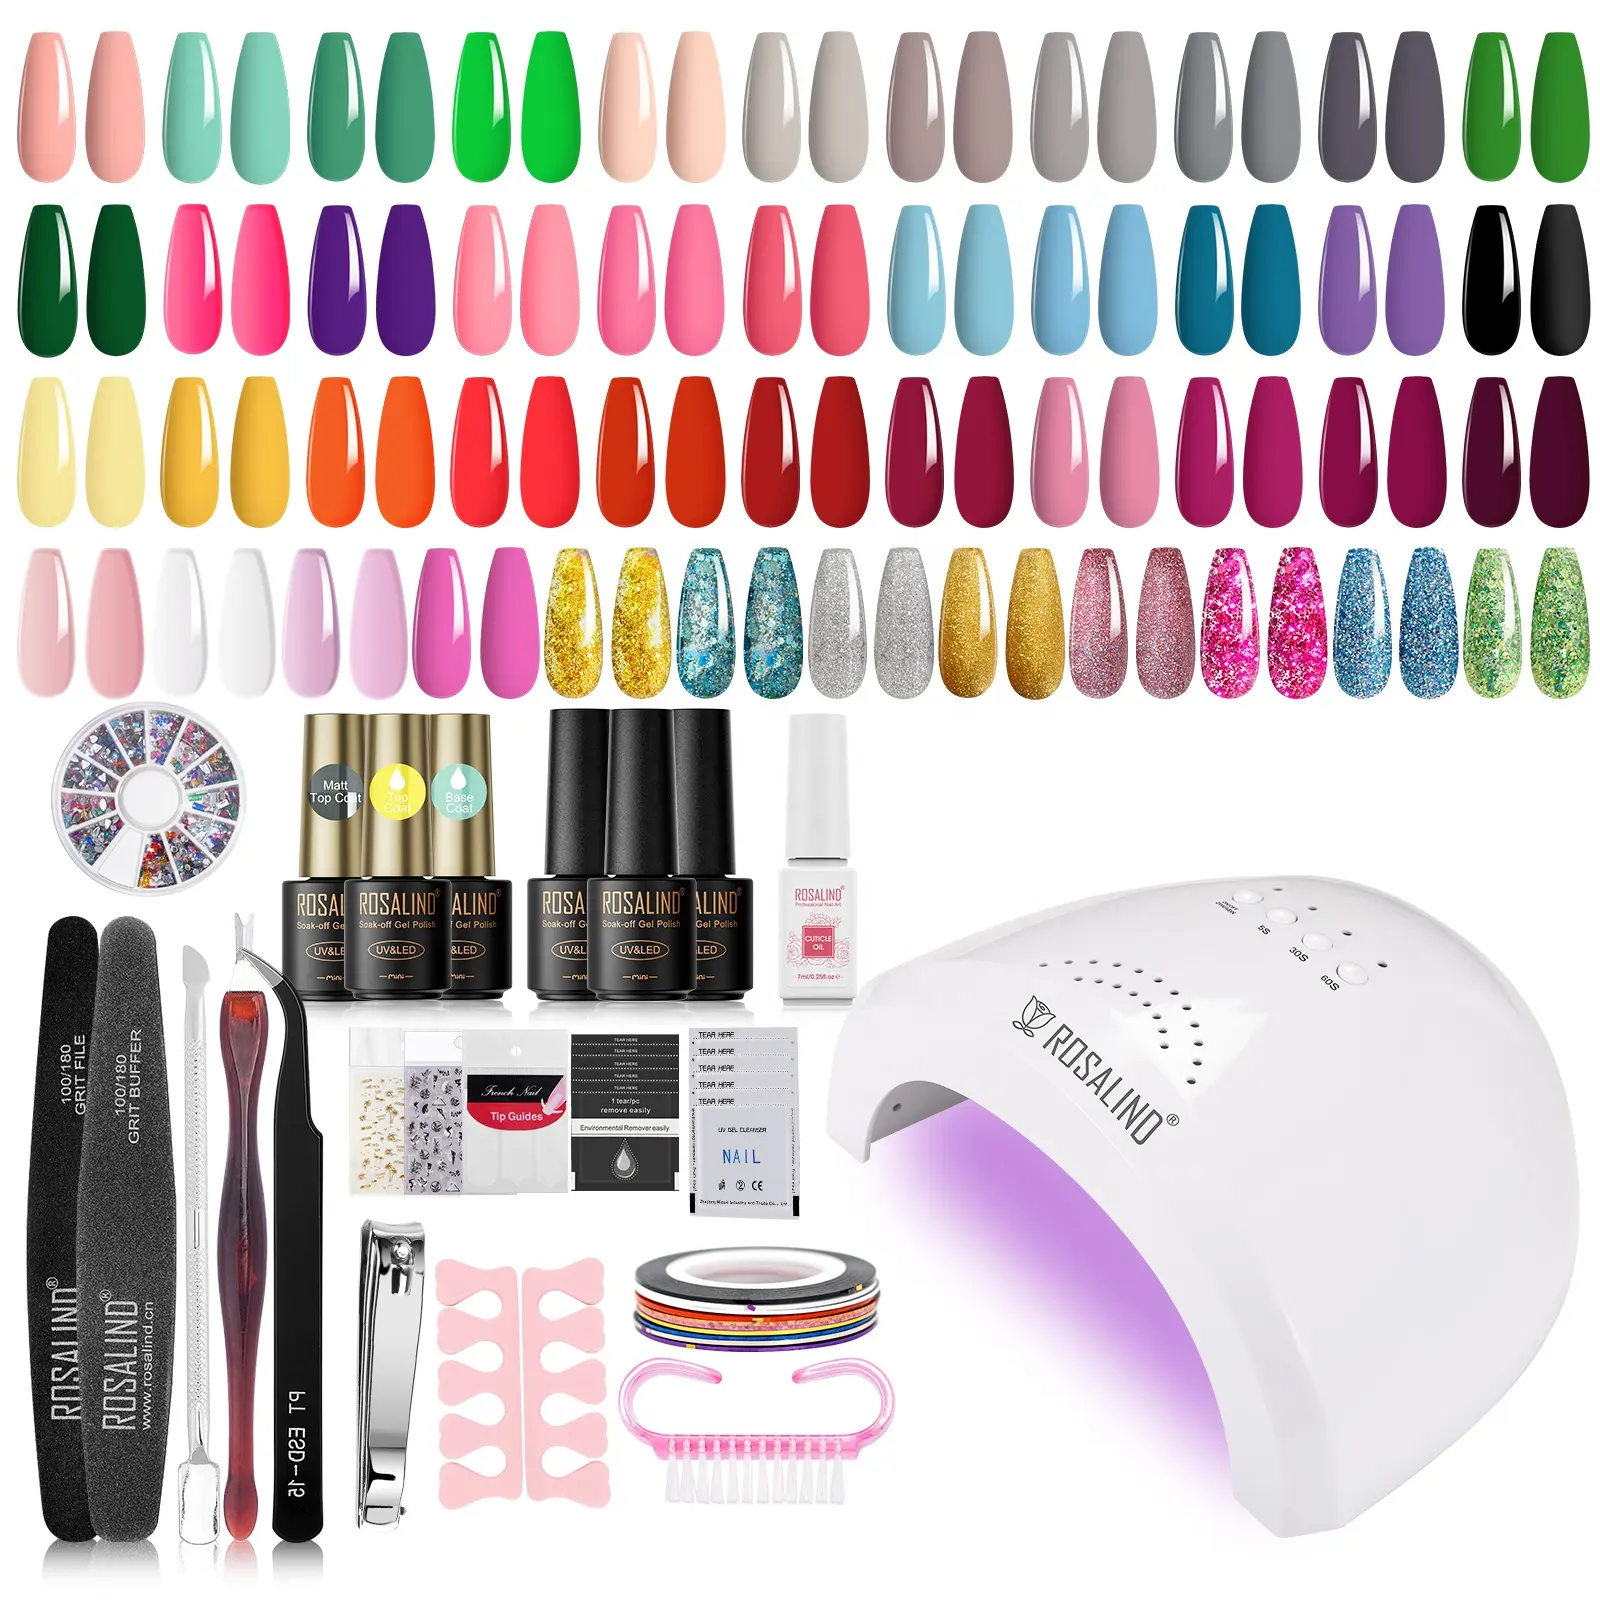 Rosalind hot sale nails art tools manicure set professional manicure uv/lamp colors gel nail polish starter kits for wholesale